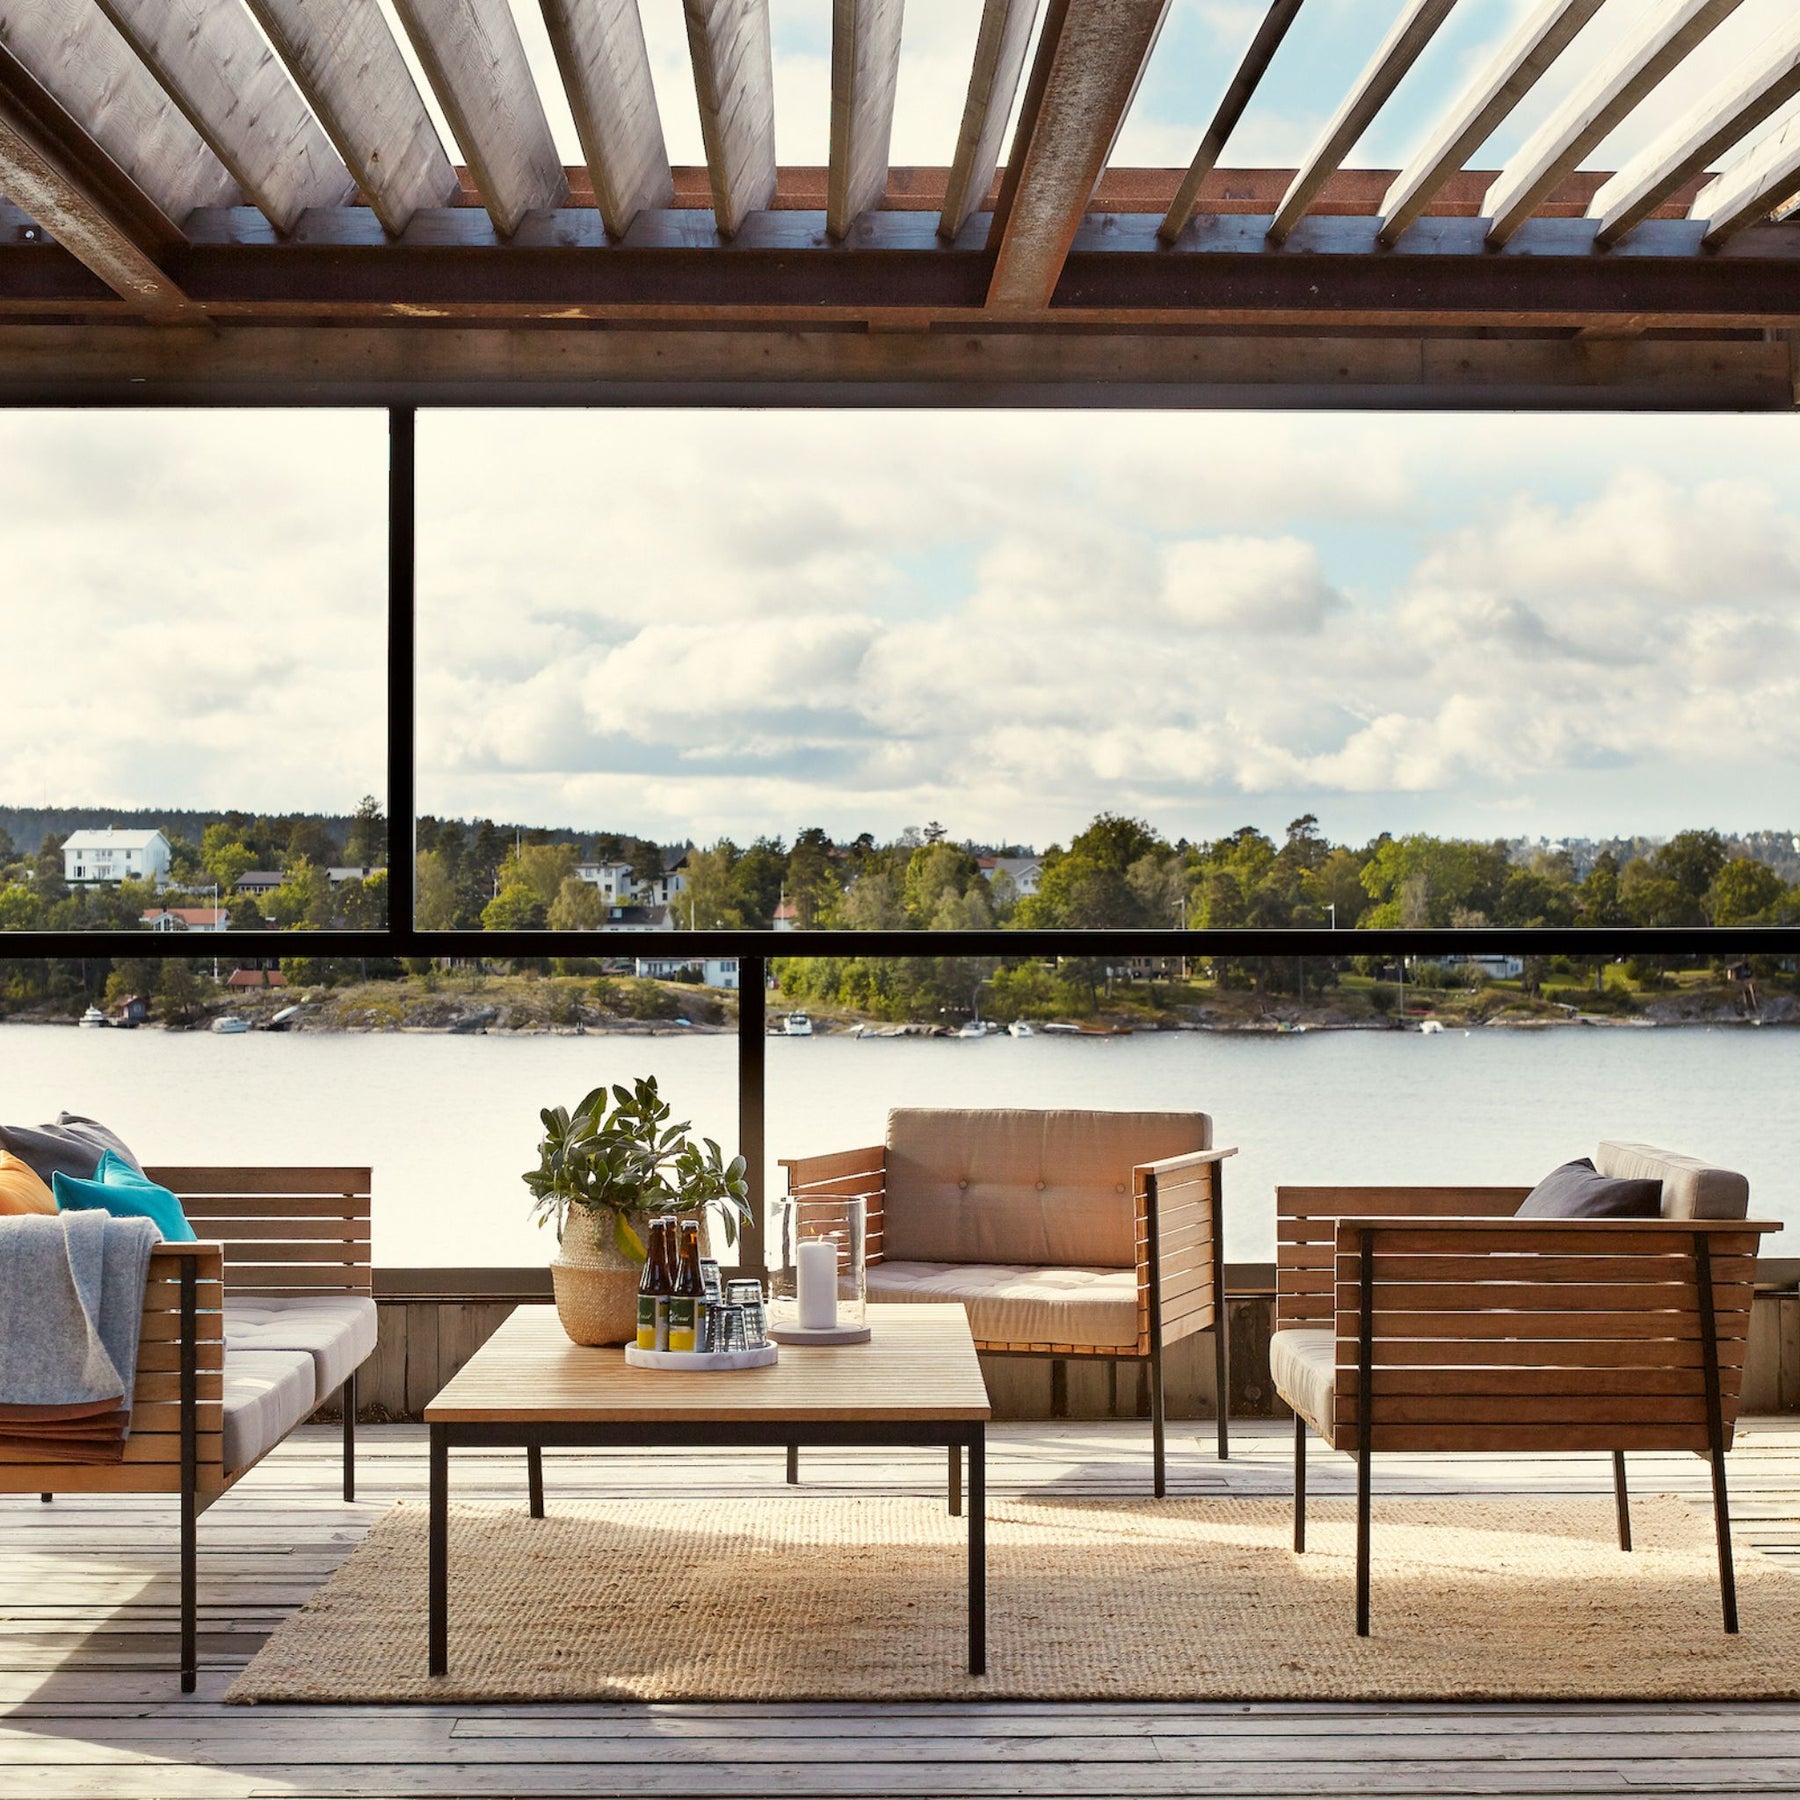 Skargaarden Haringe Lounge Chairs in situ Swedish Summer House